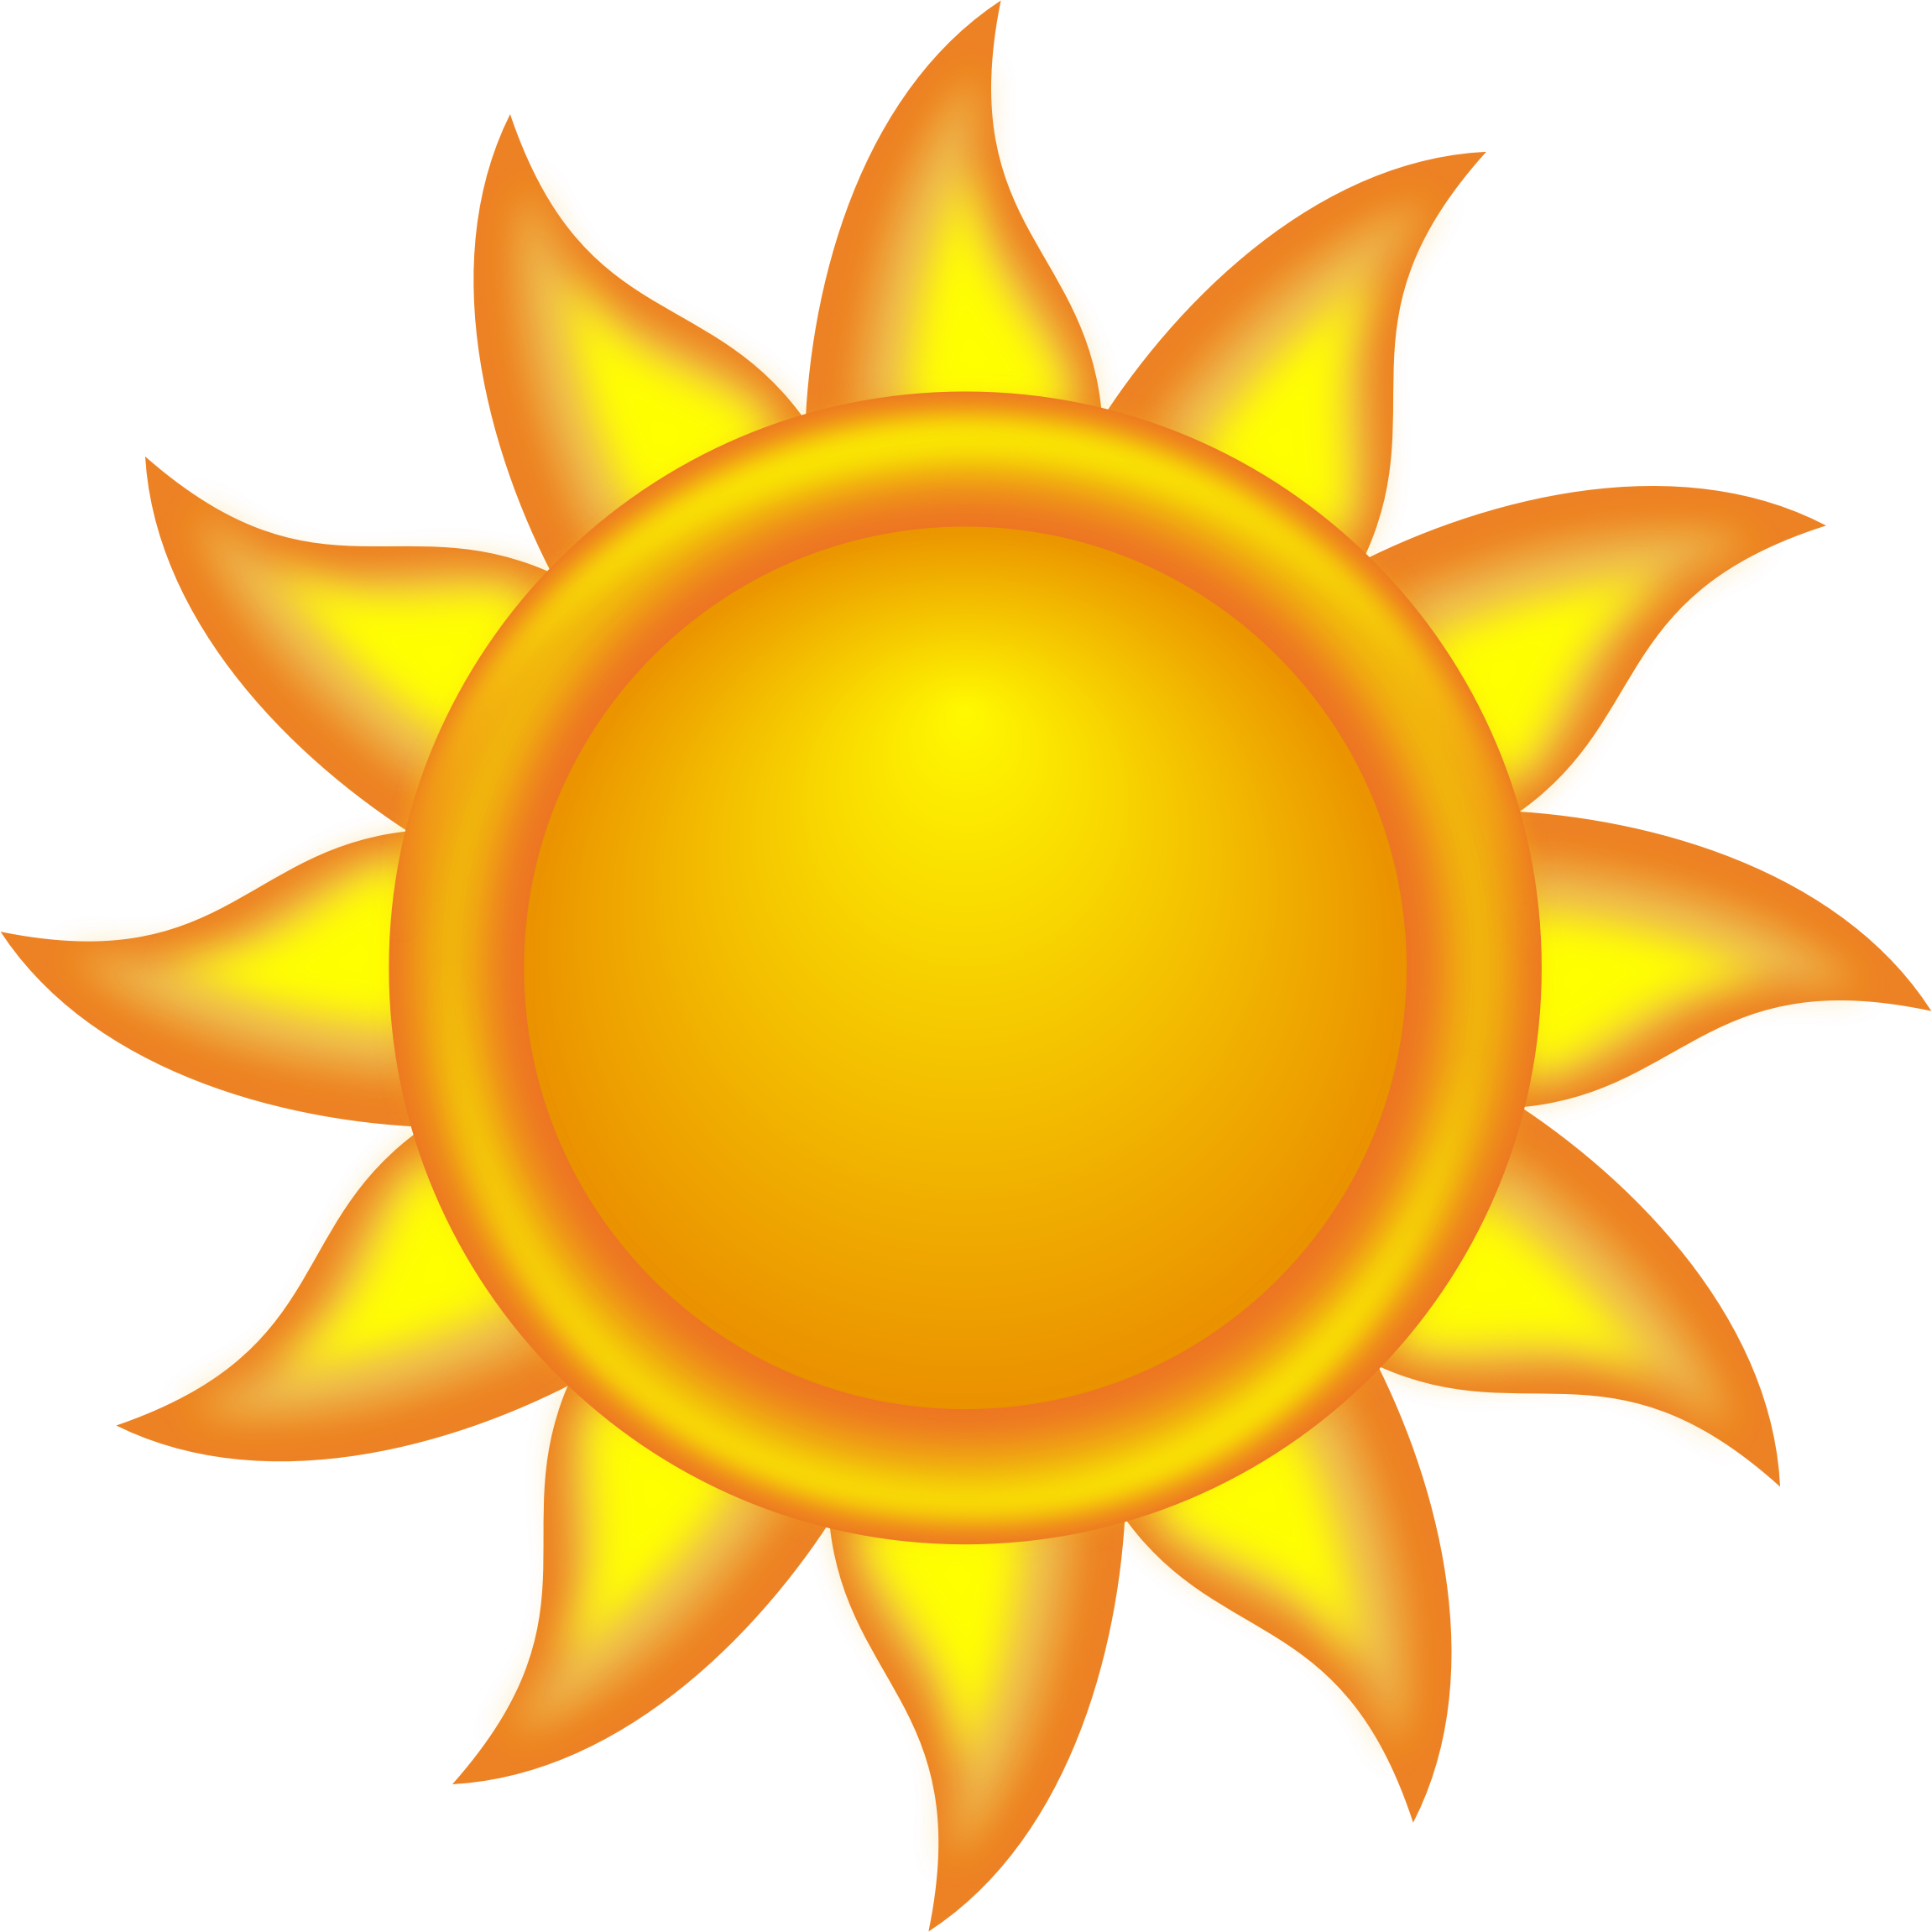 skin clipart sun exposure